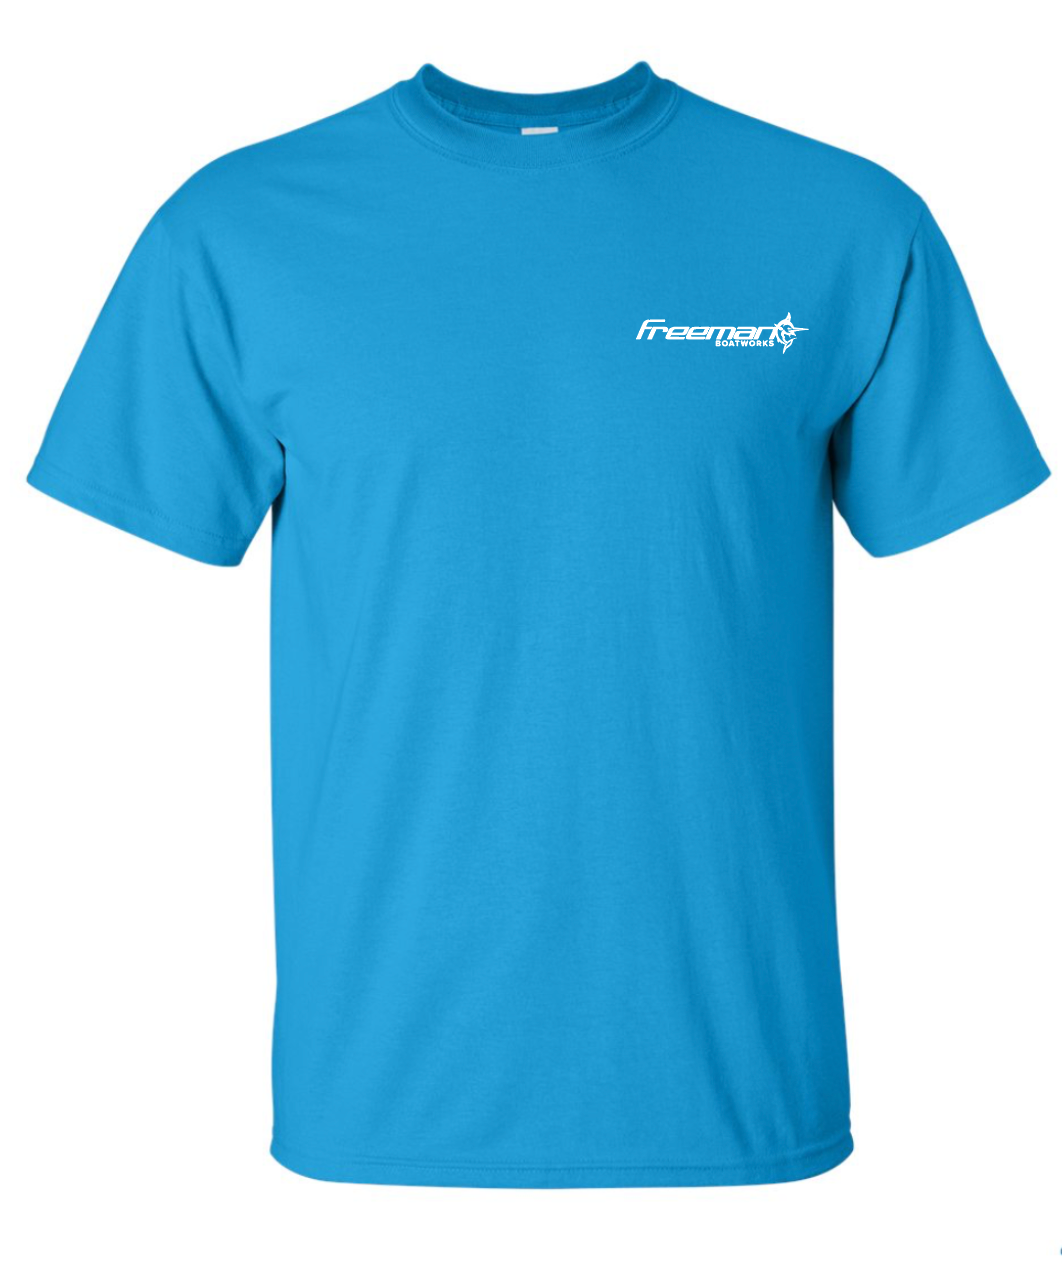 Freeman Boatworks Short Sleeve Caribbean Blue  shirt with White logo